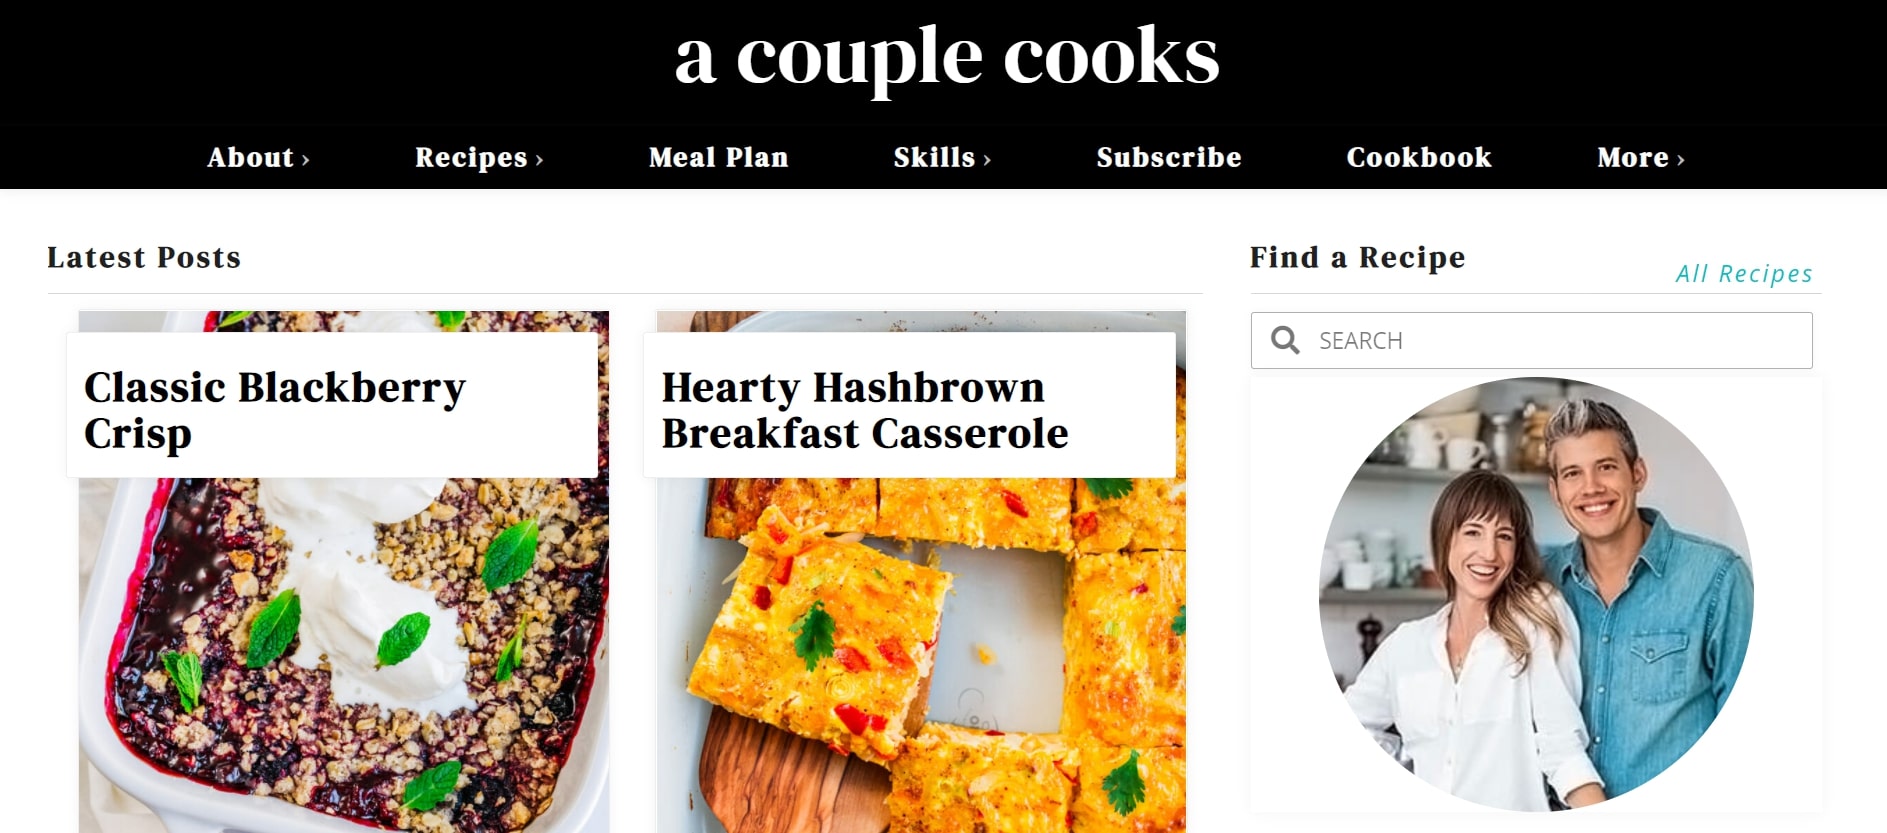 A Couple Cooks Blog